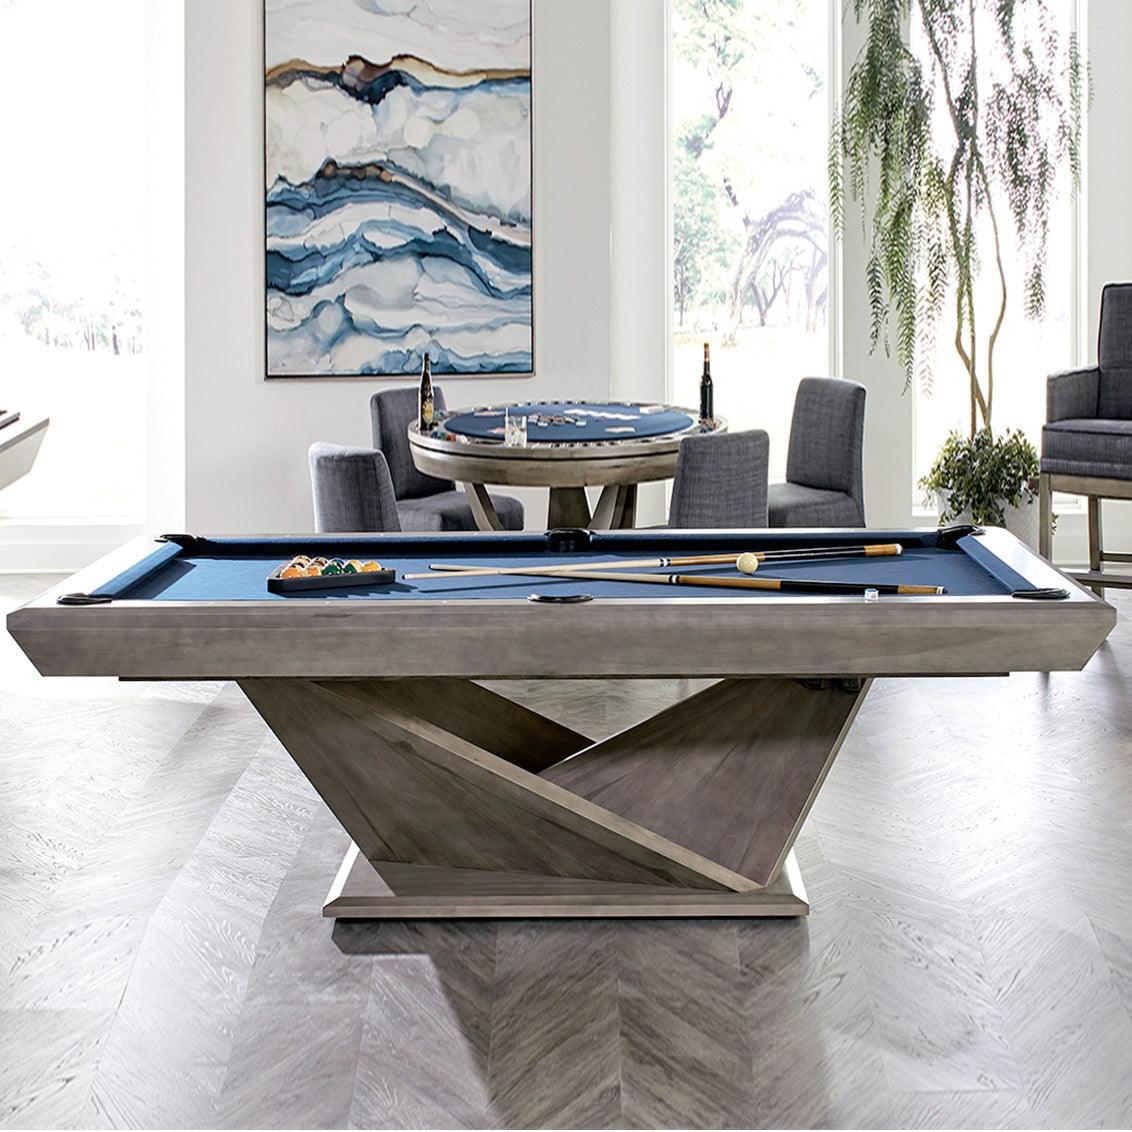 Table snooker billiards table indoor or outdoor luxury design CHND13 - Venini Furniture 